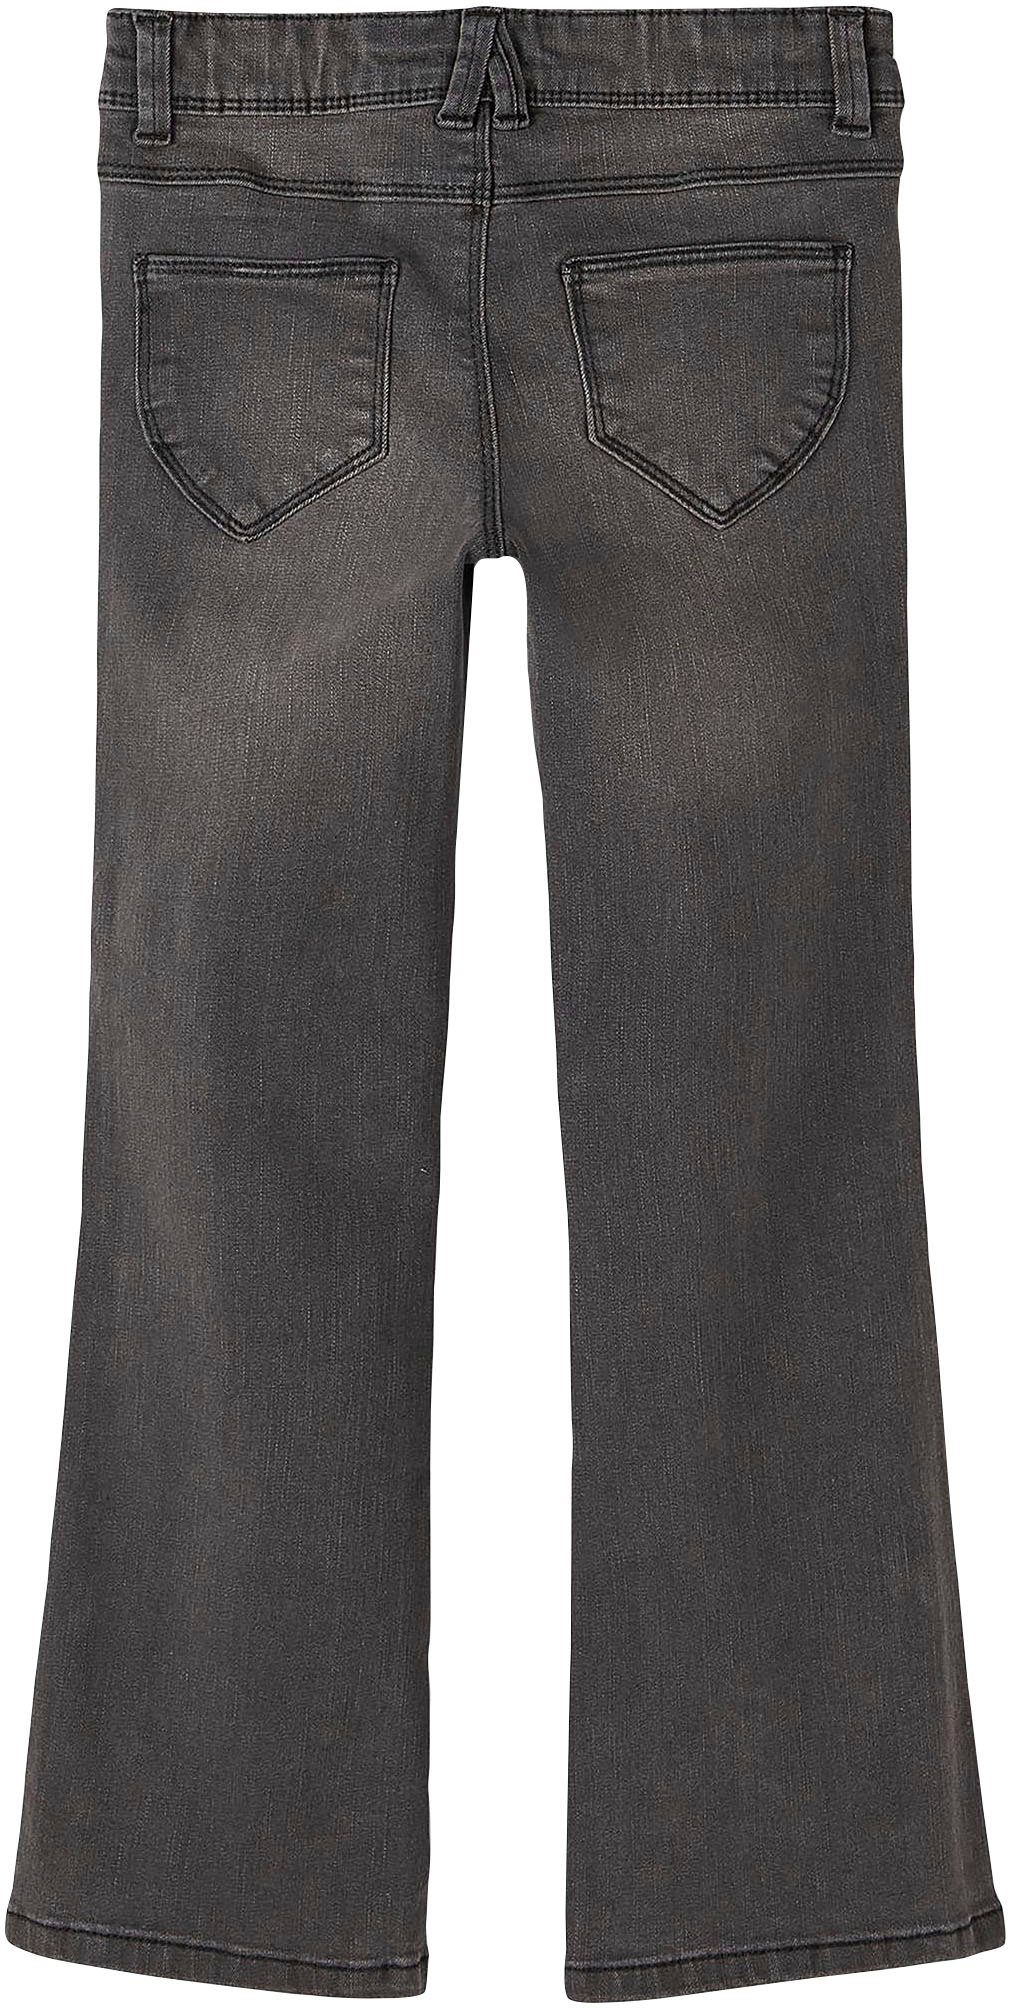 Name It Bootcut-Jeans NKFPOLLY NOOS grey BOOT mit Stretch JEANS denim dark 1142-AU SKINNY